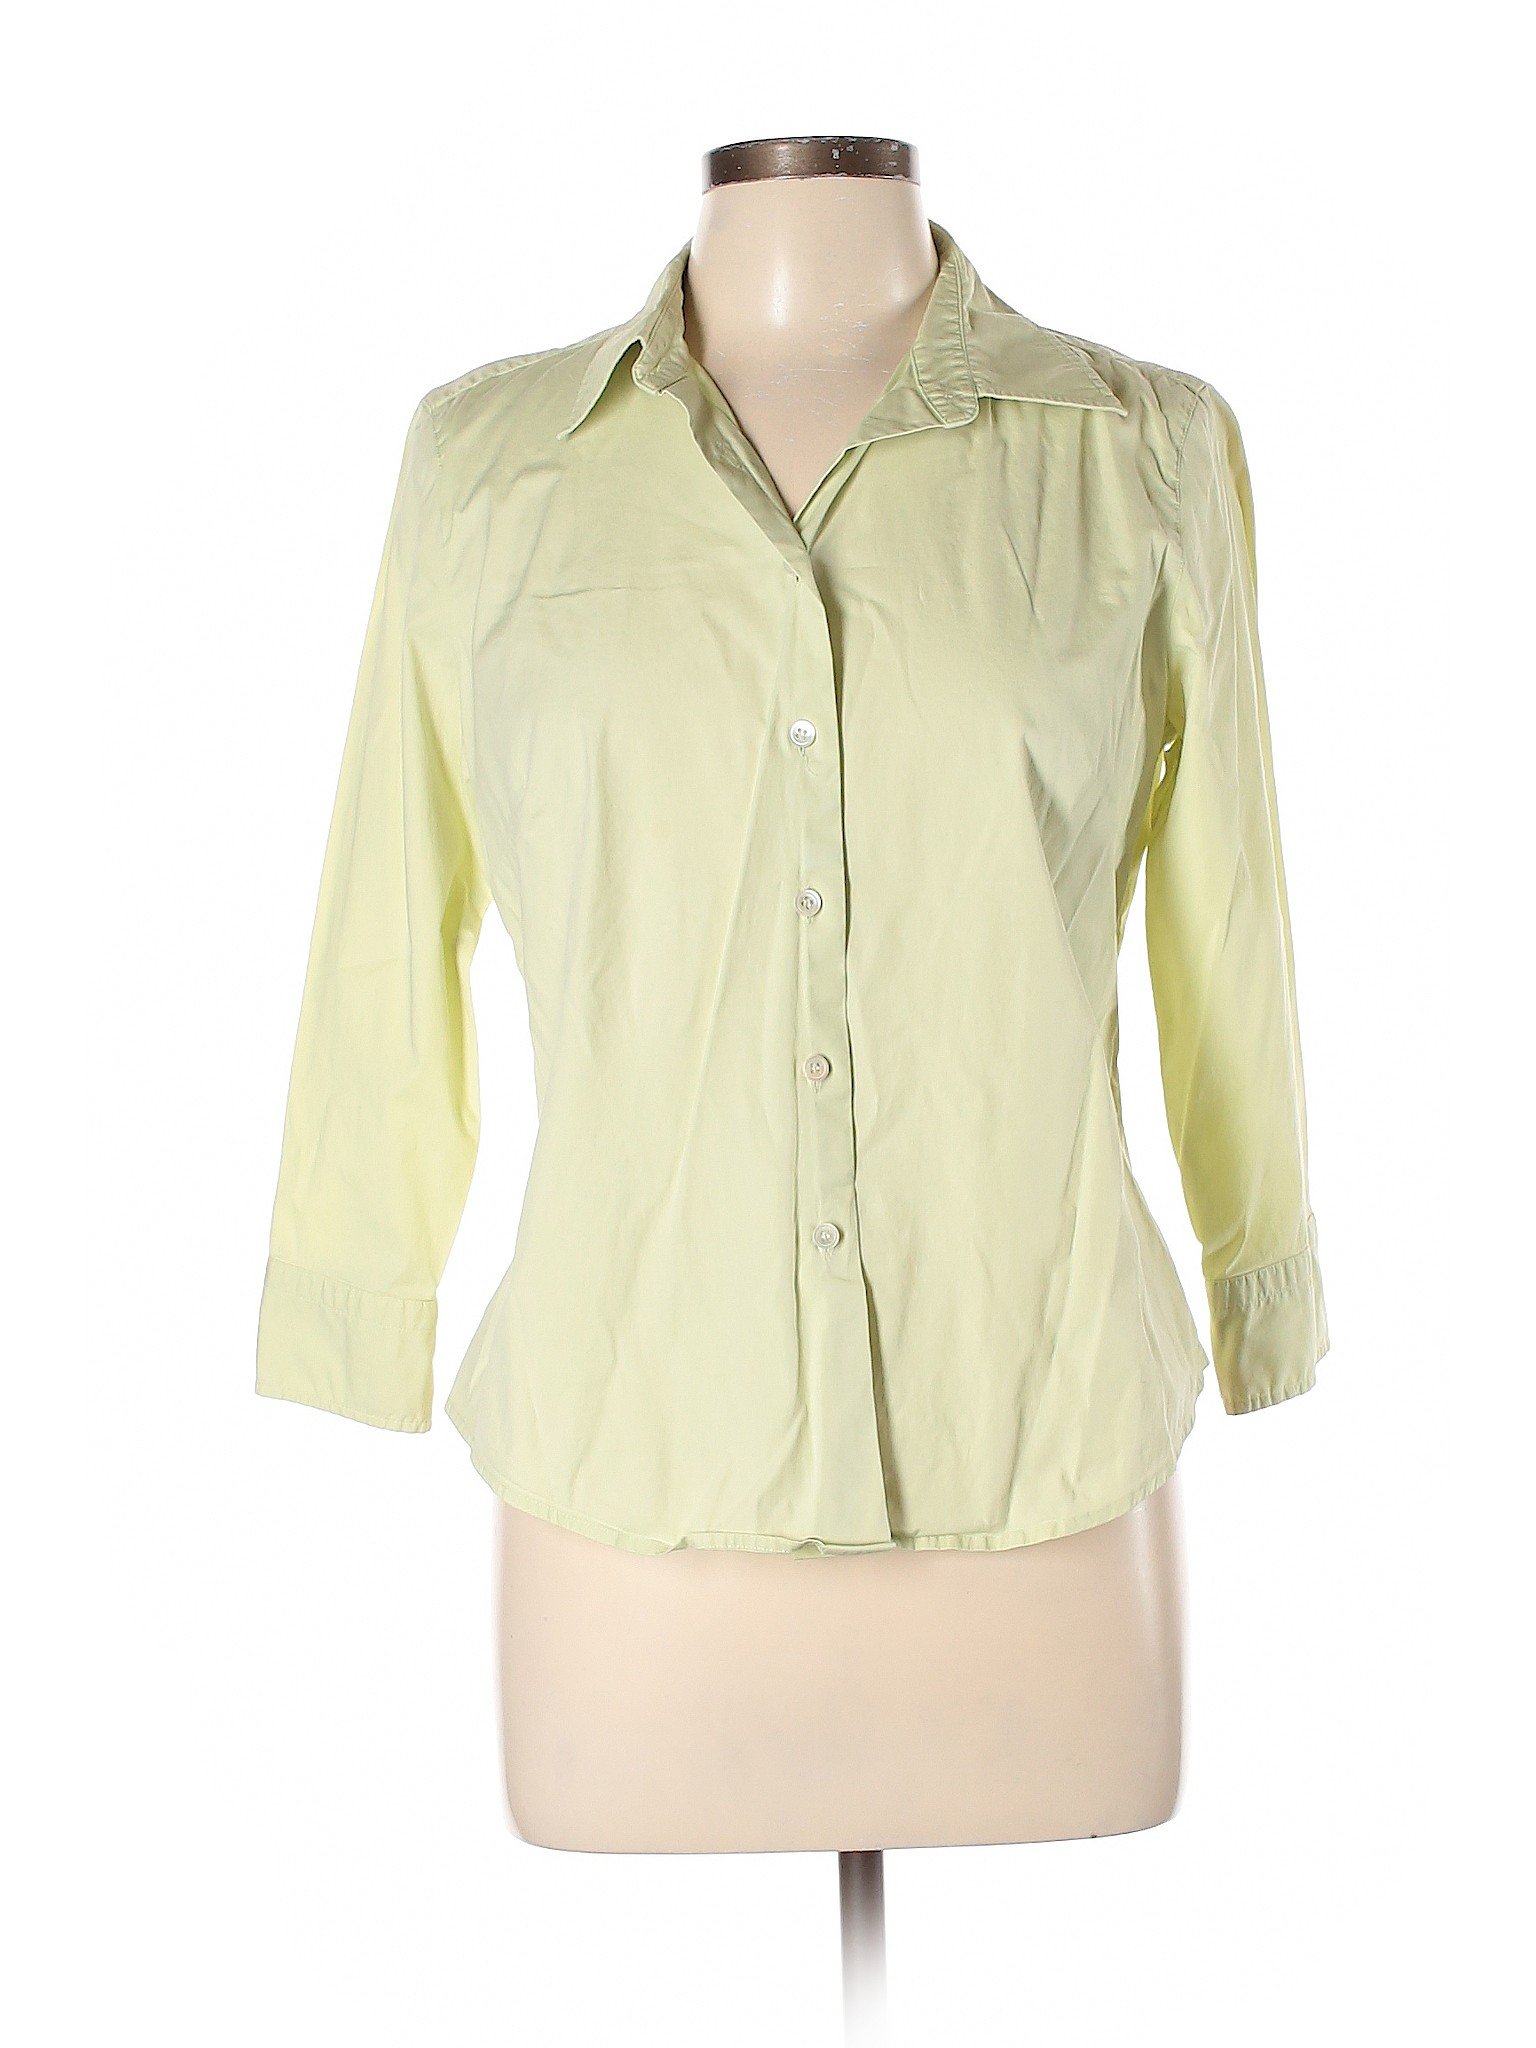 J.Crew Women Green 3/4 Sleeve Button-Down Shirt L | eBay